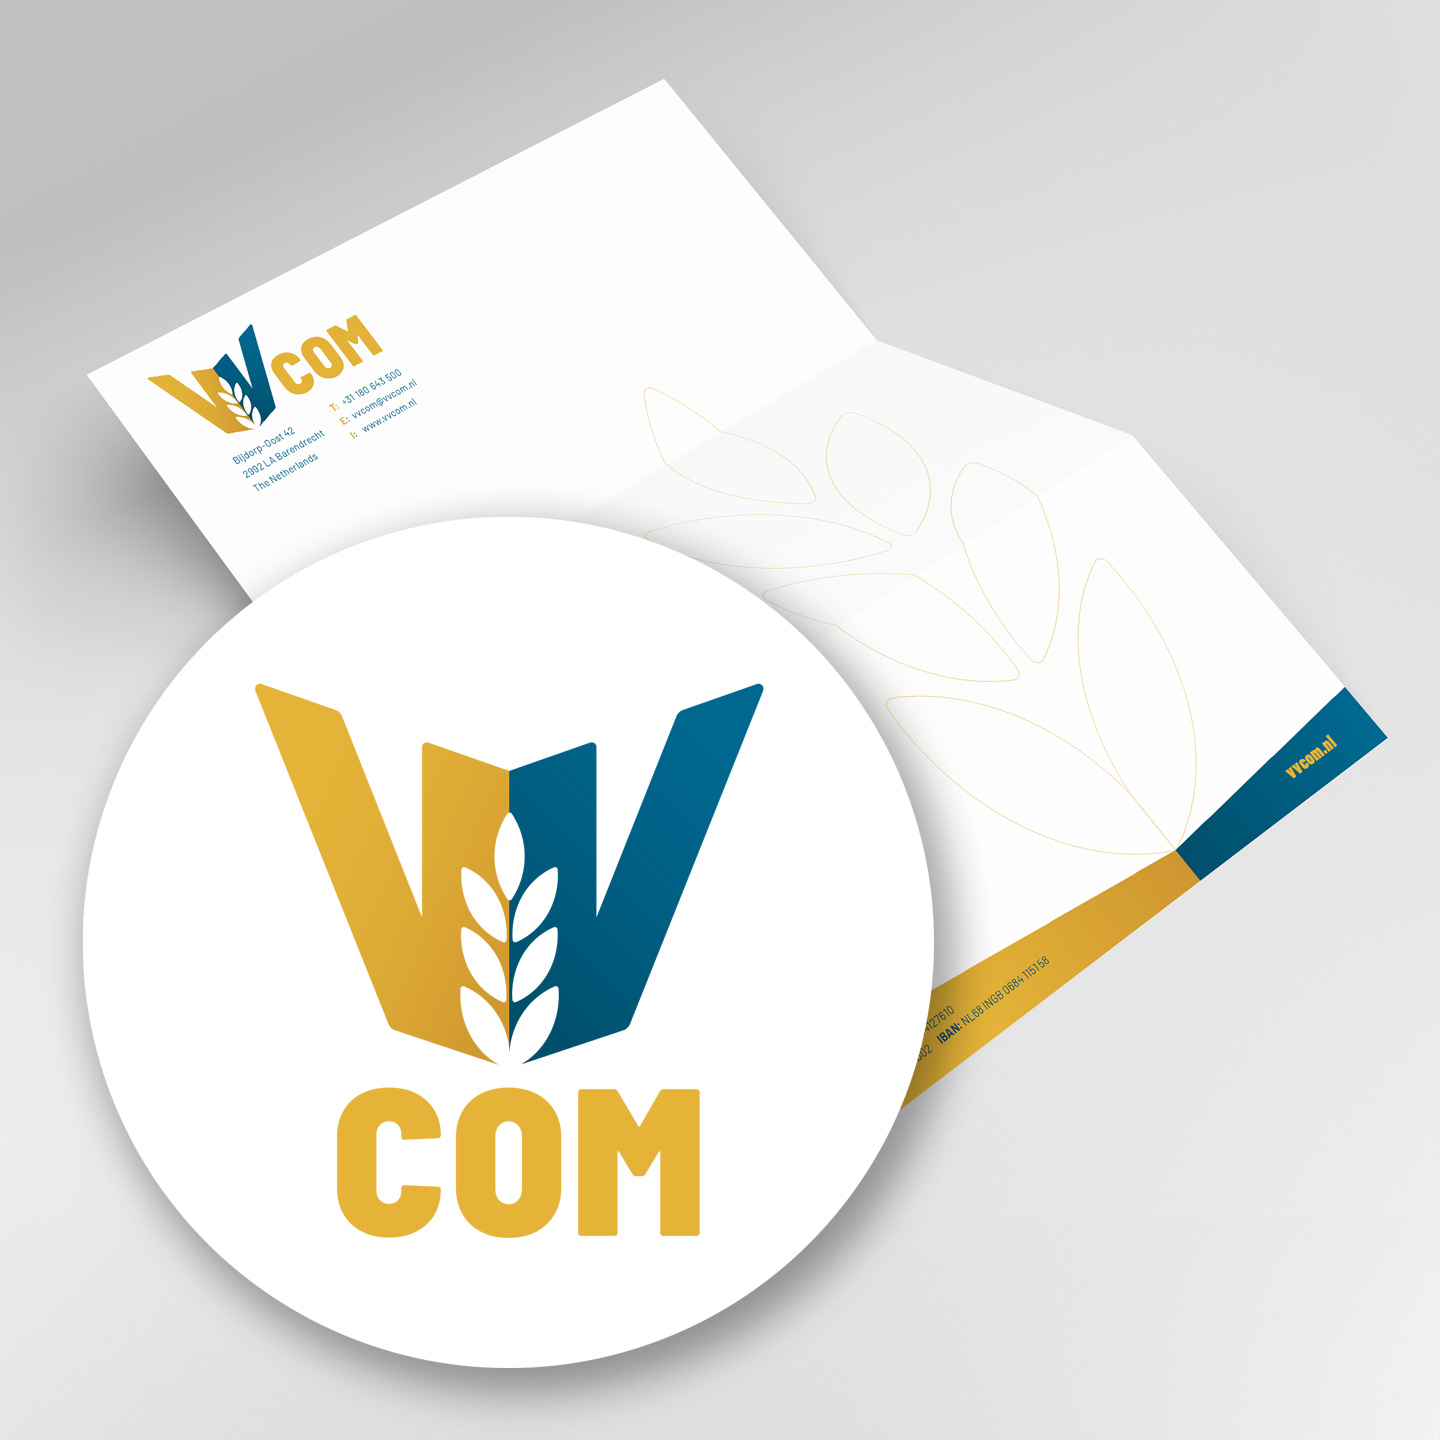 vvcom-new-mockup